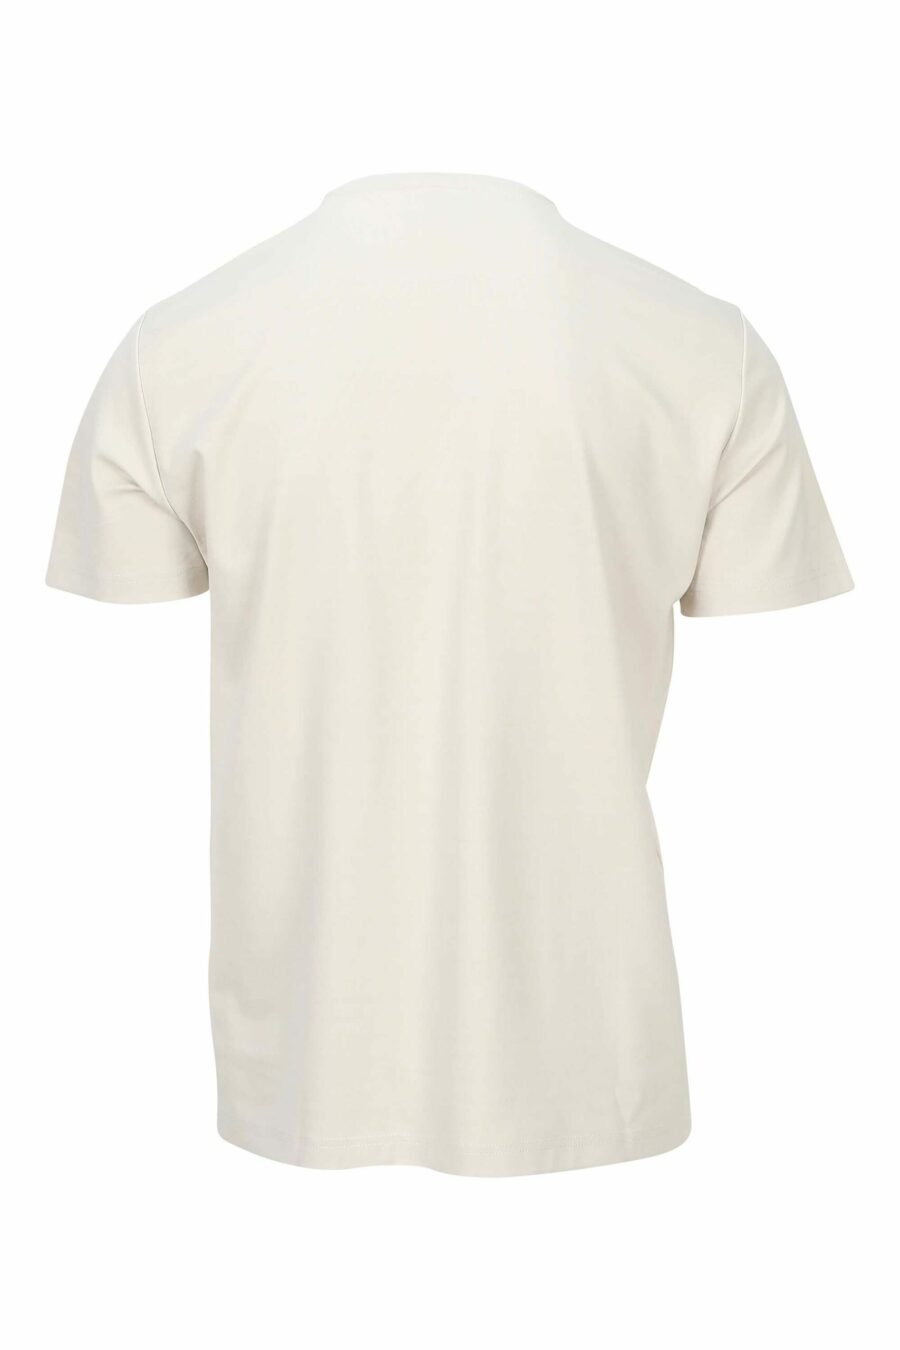 T-shirt cinzenta com maxilogo preto "lux identity" - 8057767001988 1 à escala